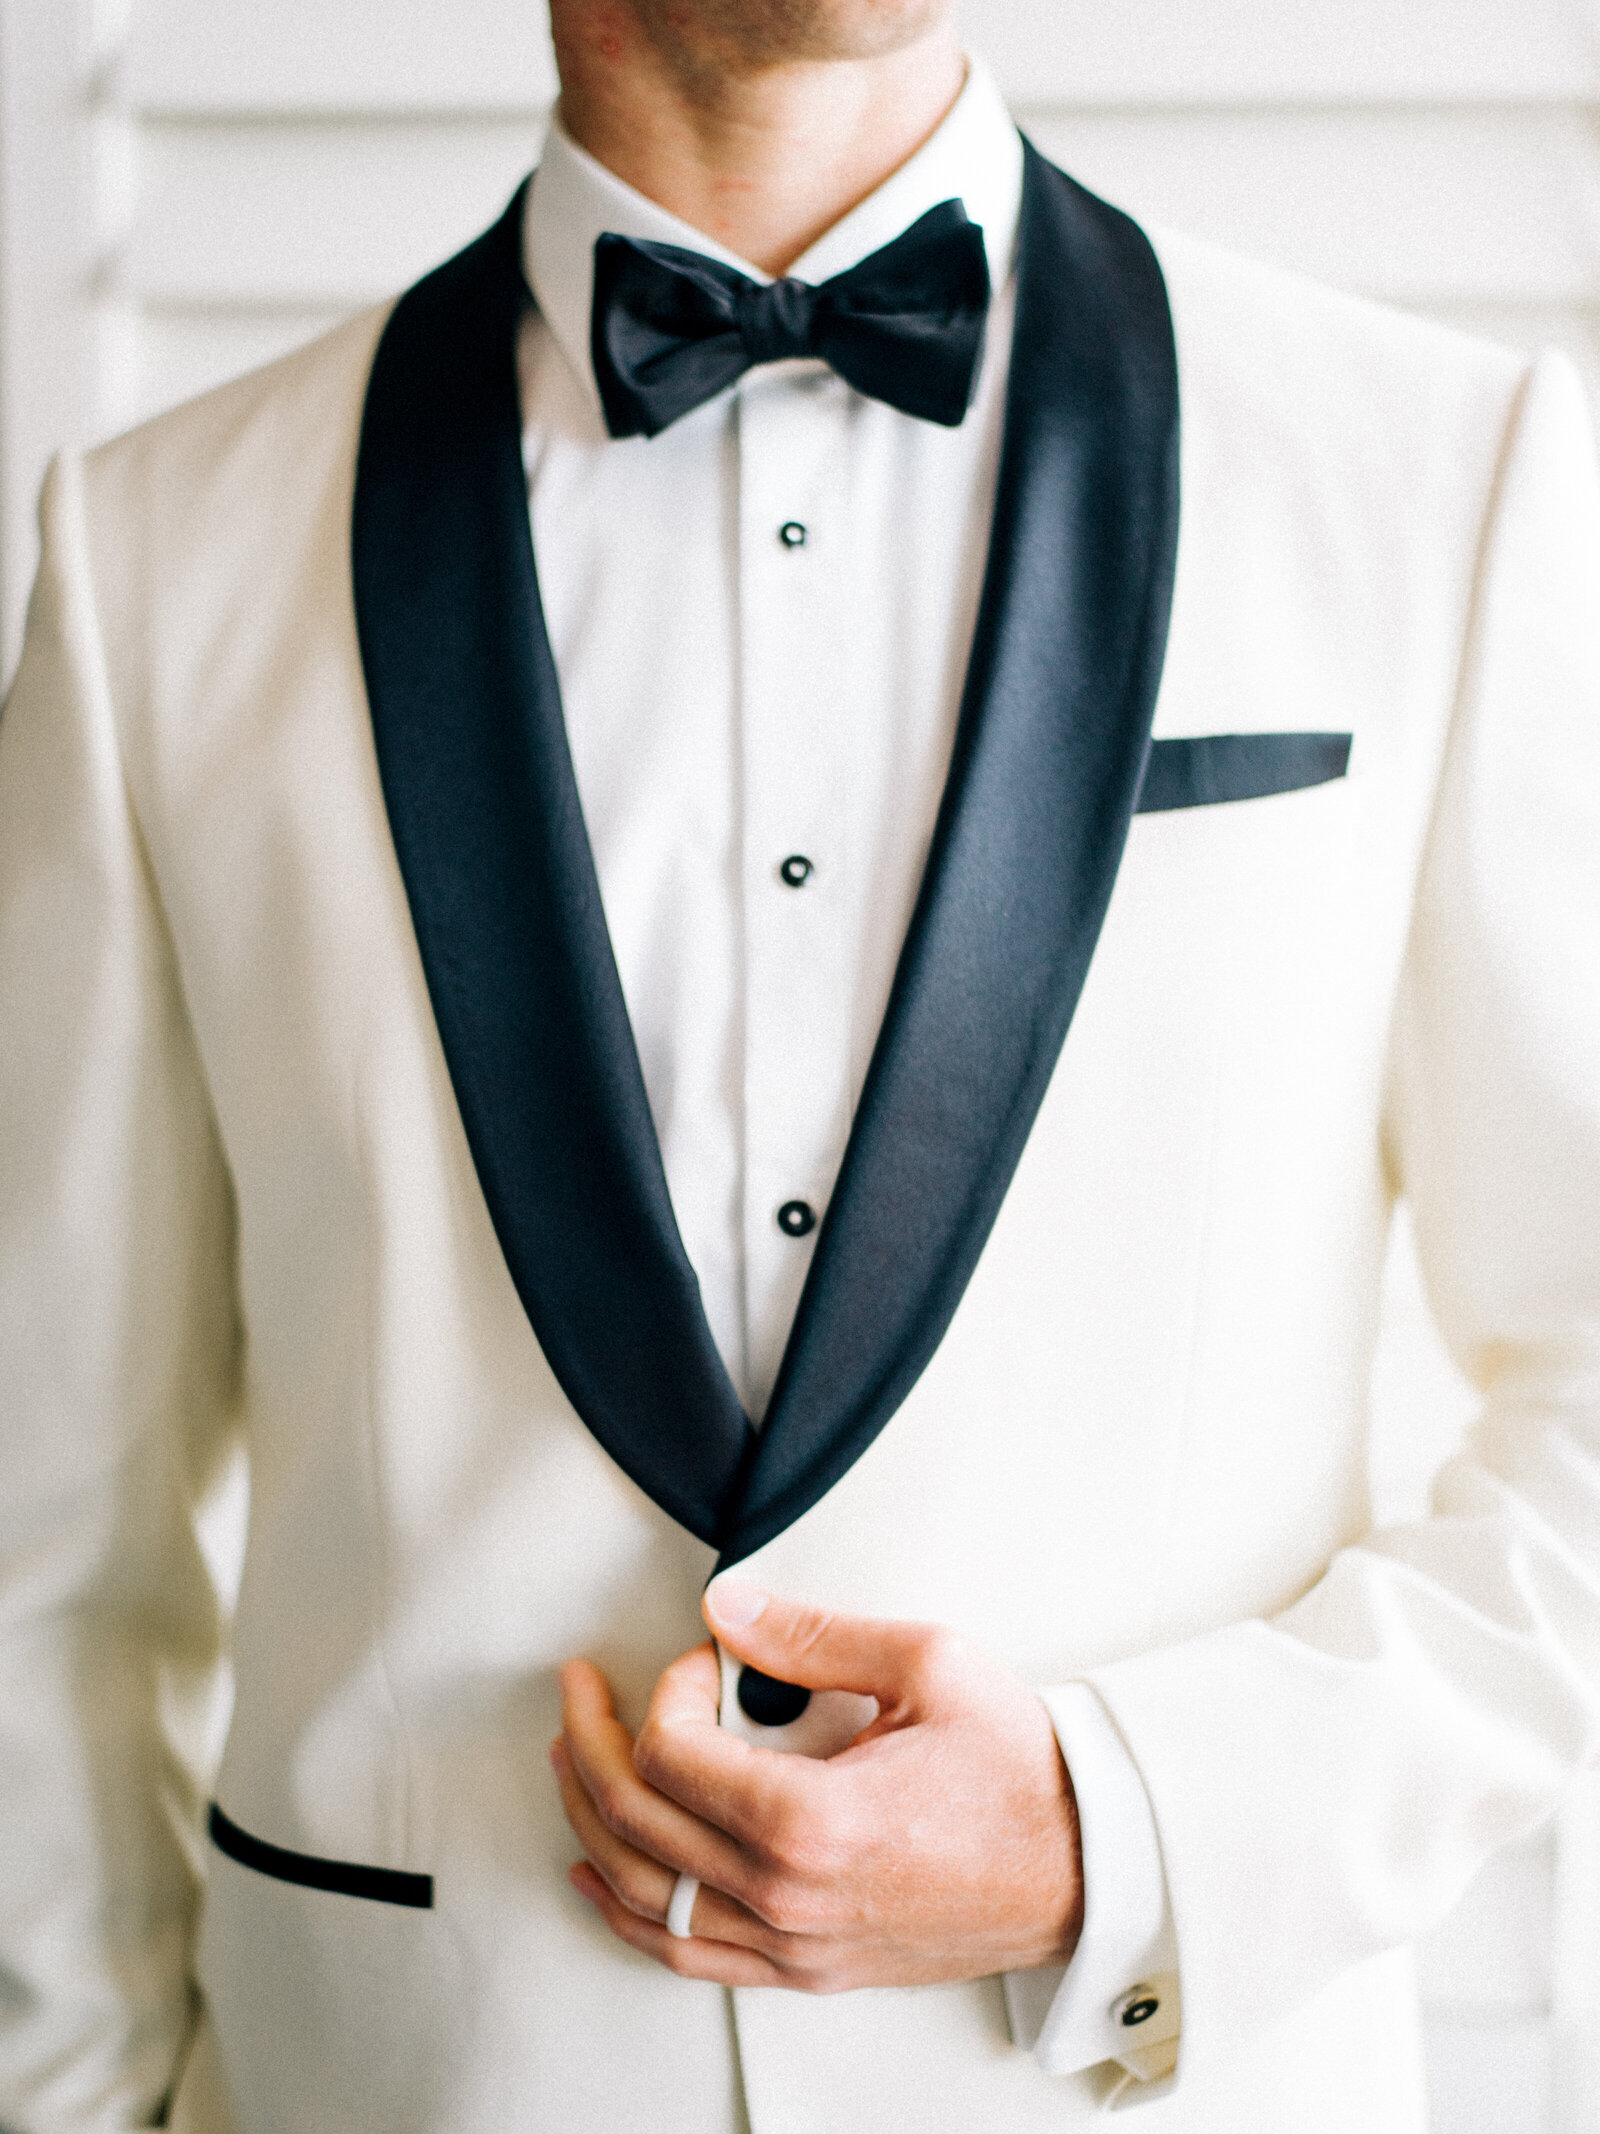 045-sean-cook-wedding-photography-groom-white-tuxedo